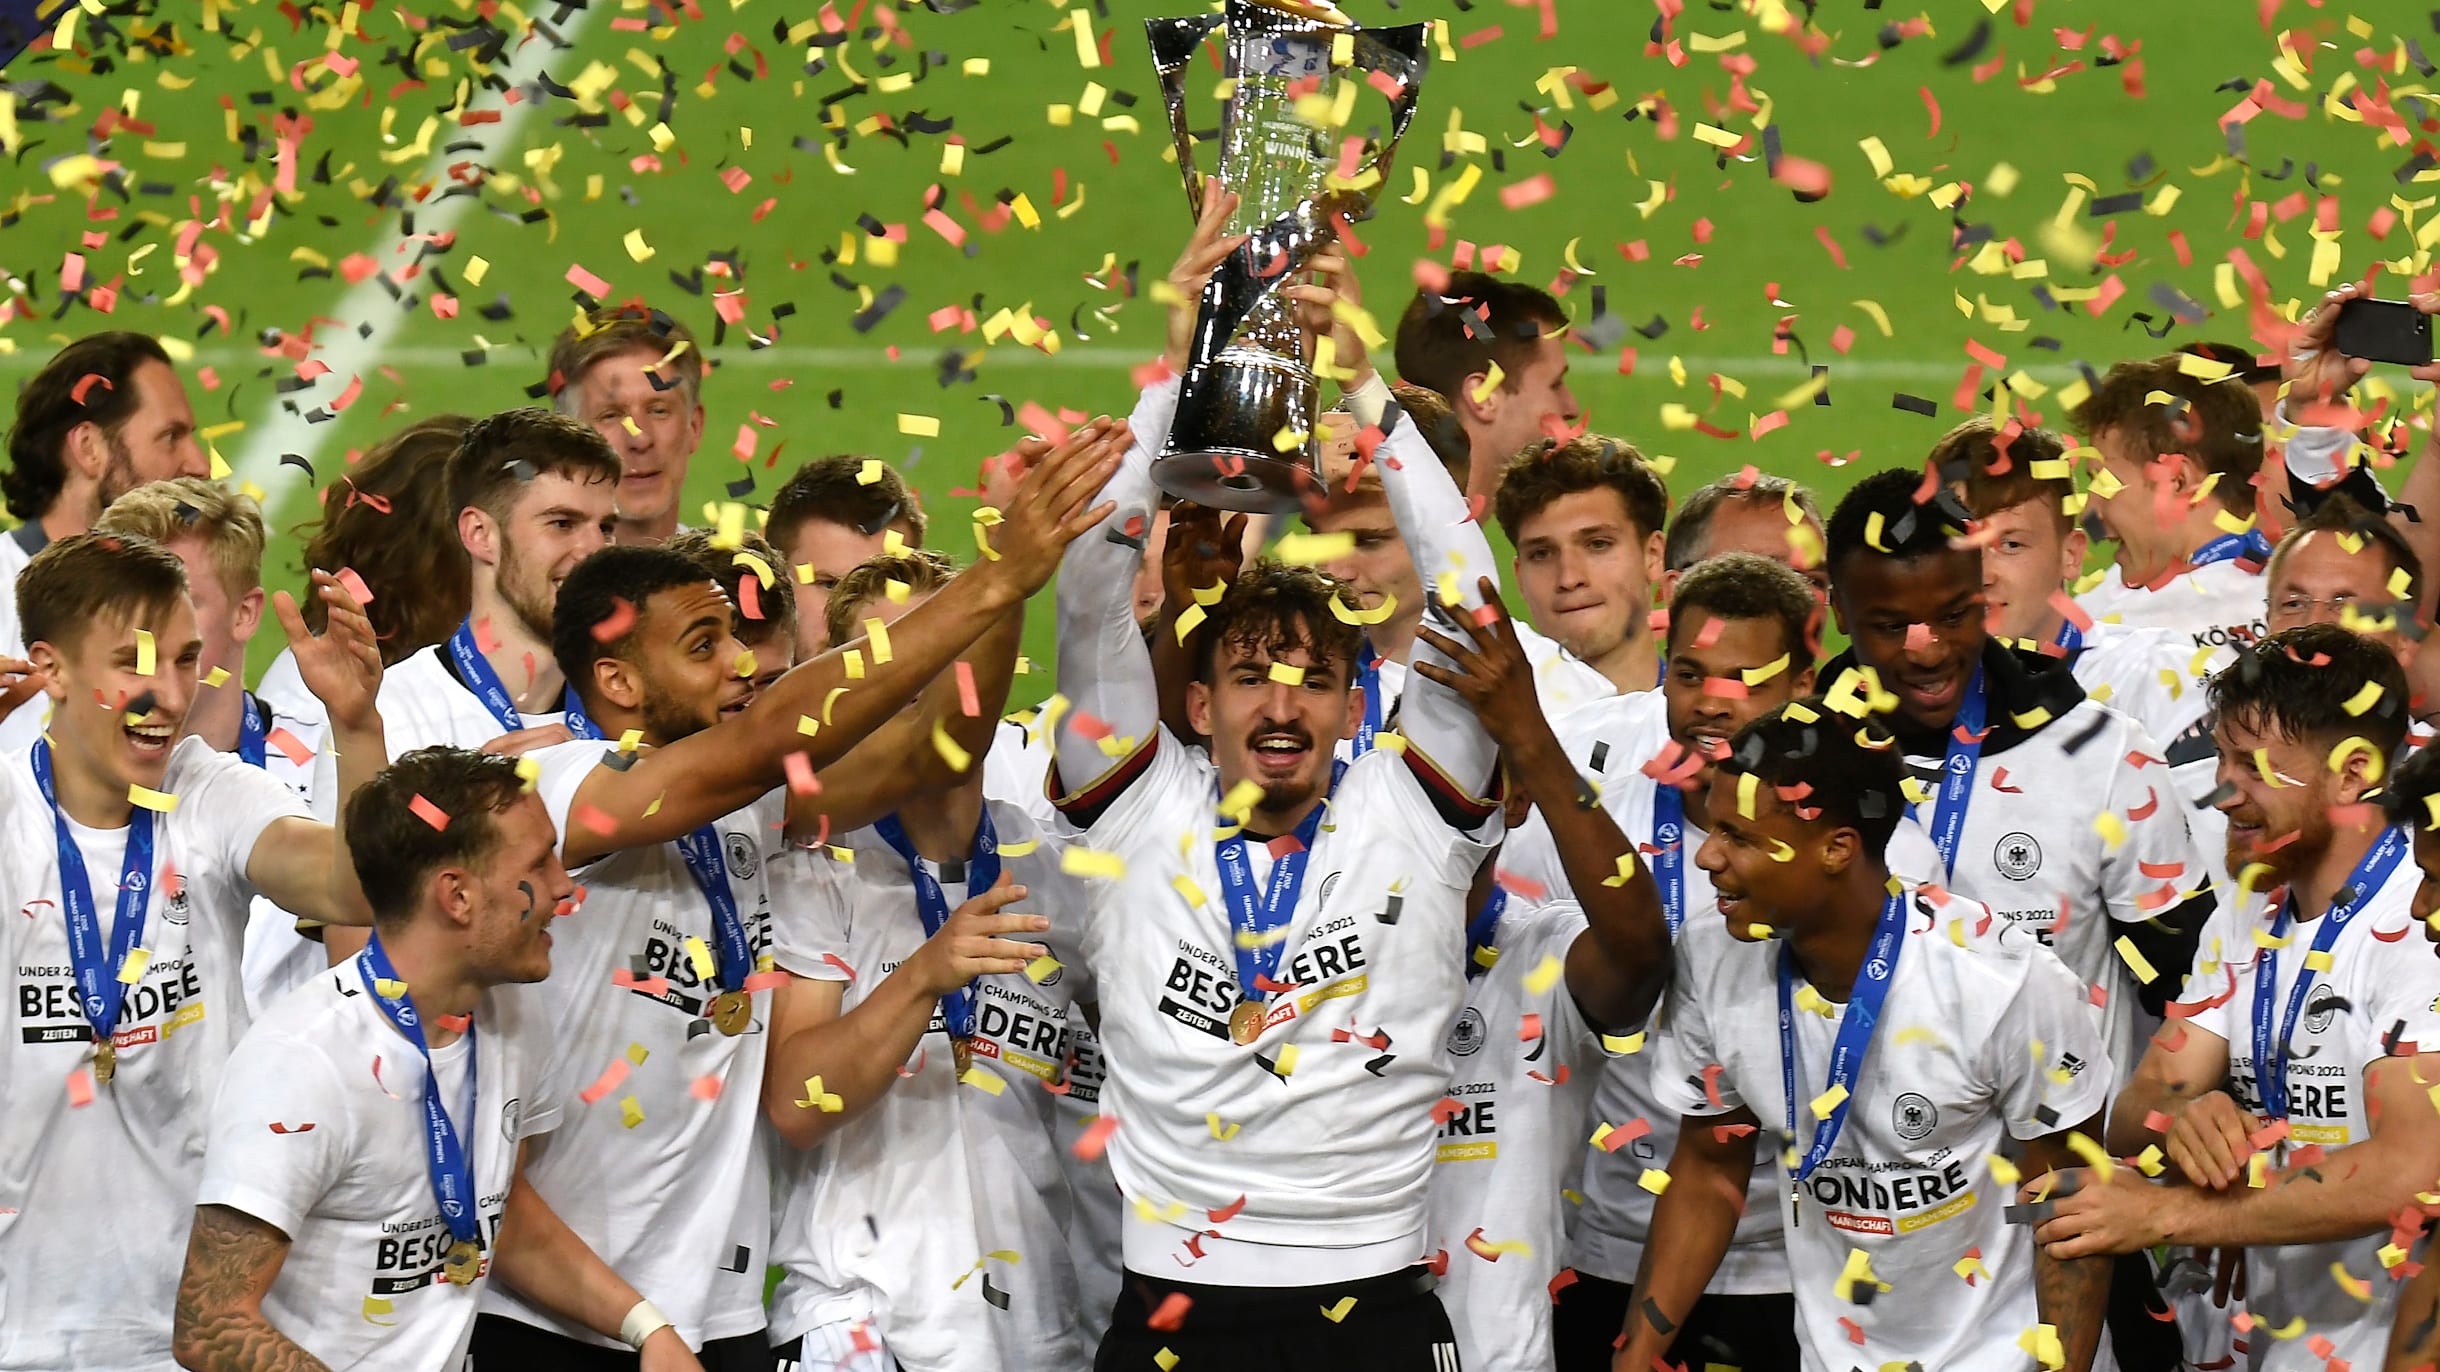 European Under-21 Championship 2019: Fixtures, Golden Boot, schedule, how  to watch, odds, squads - Eurosport